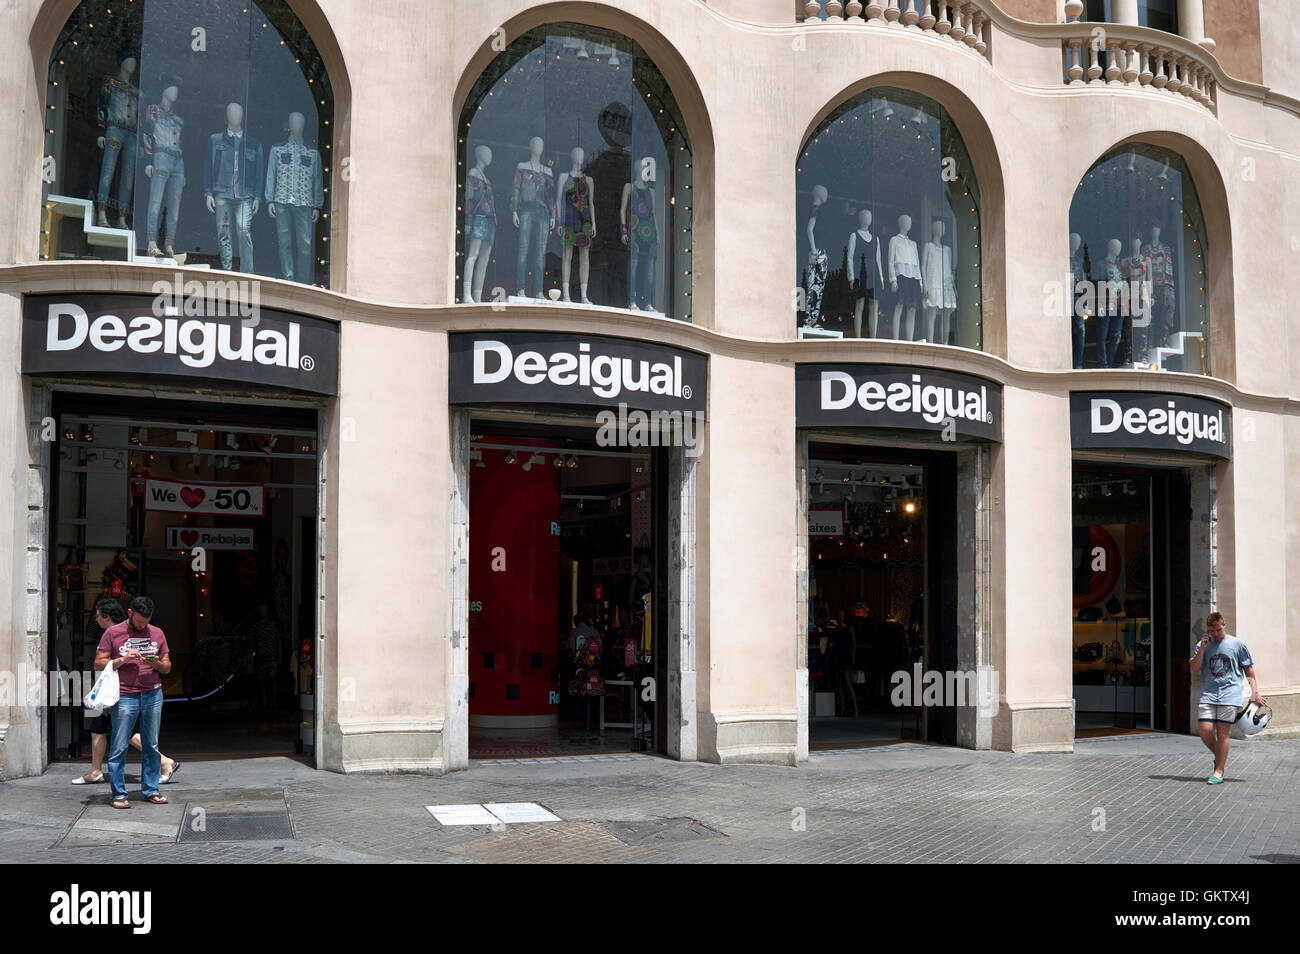 Desigual shop front, Barcelona, Spain Stock Photo